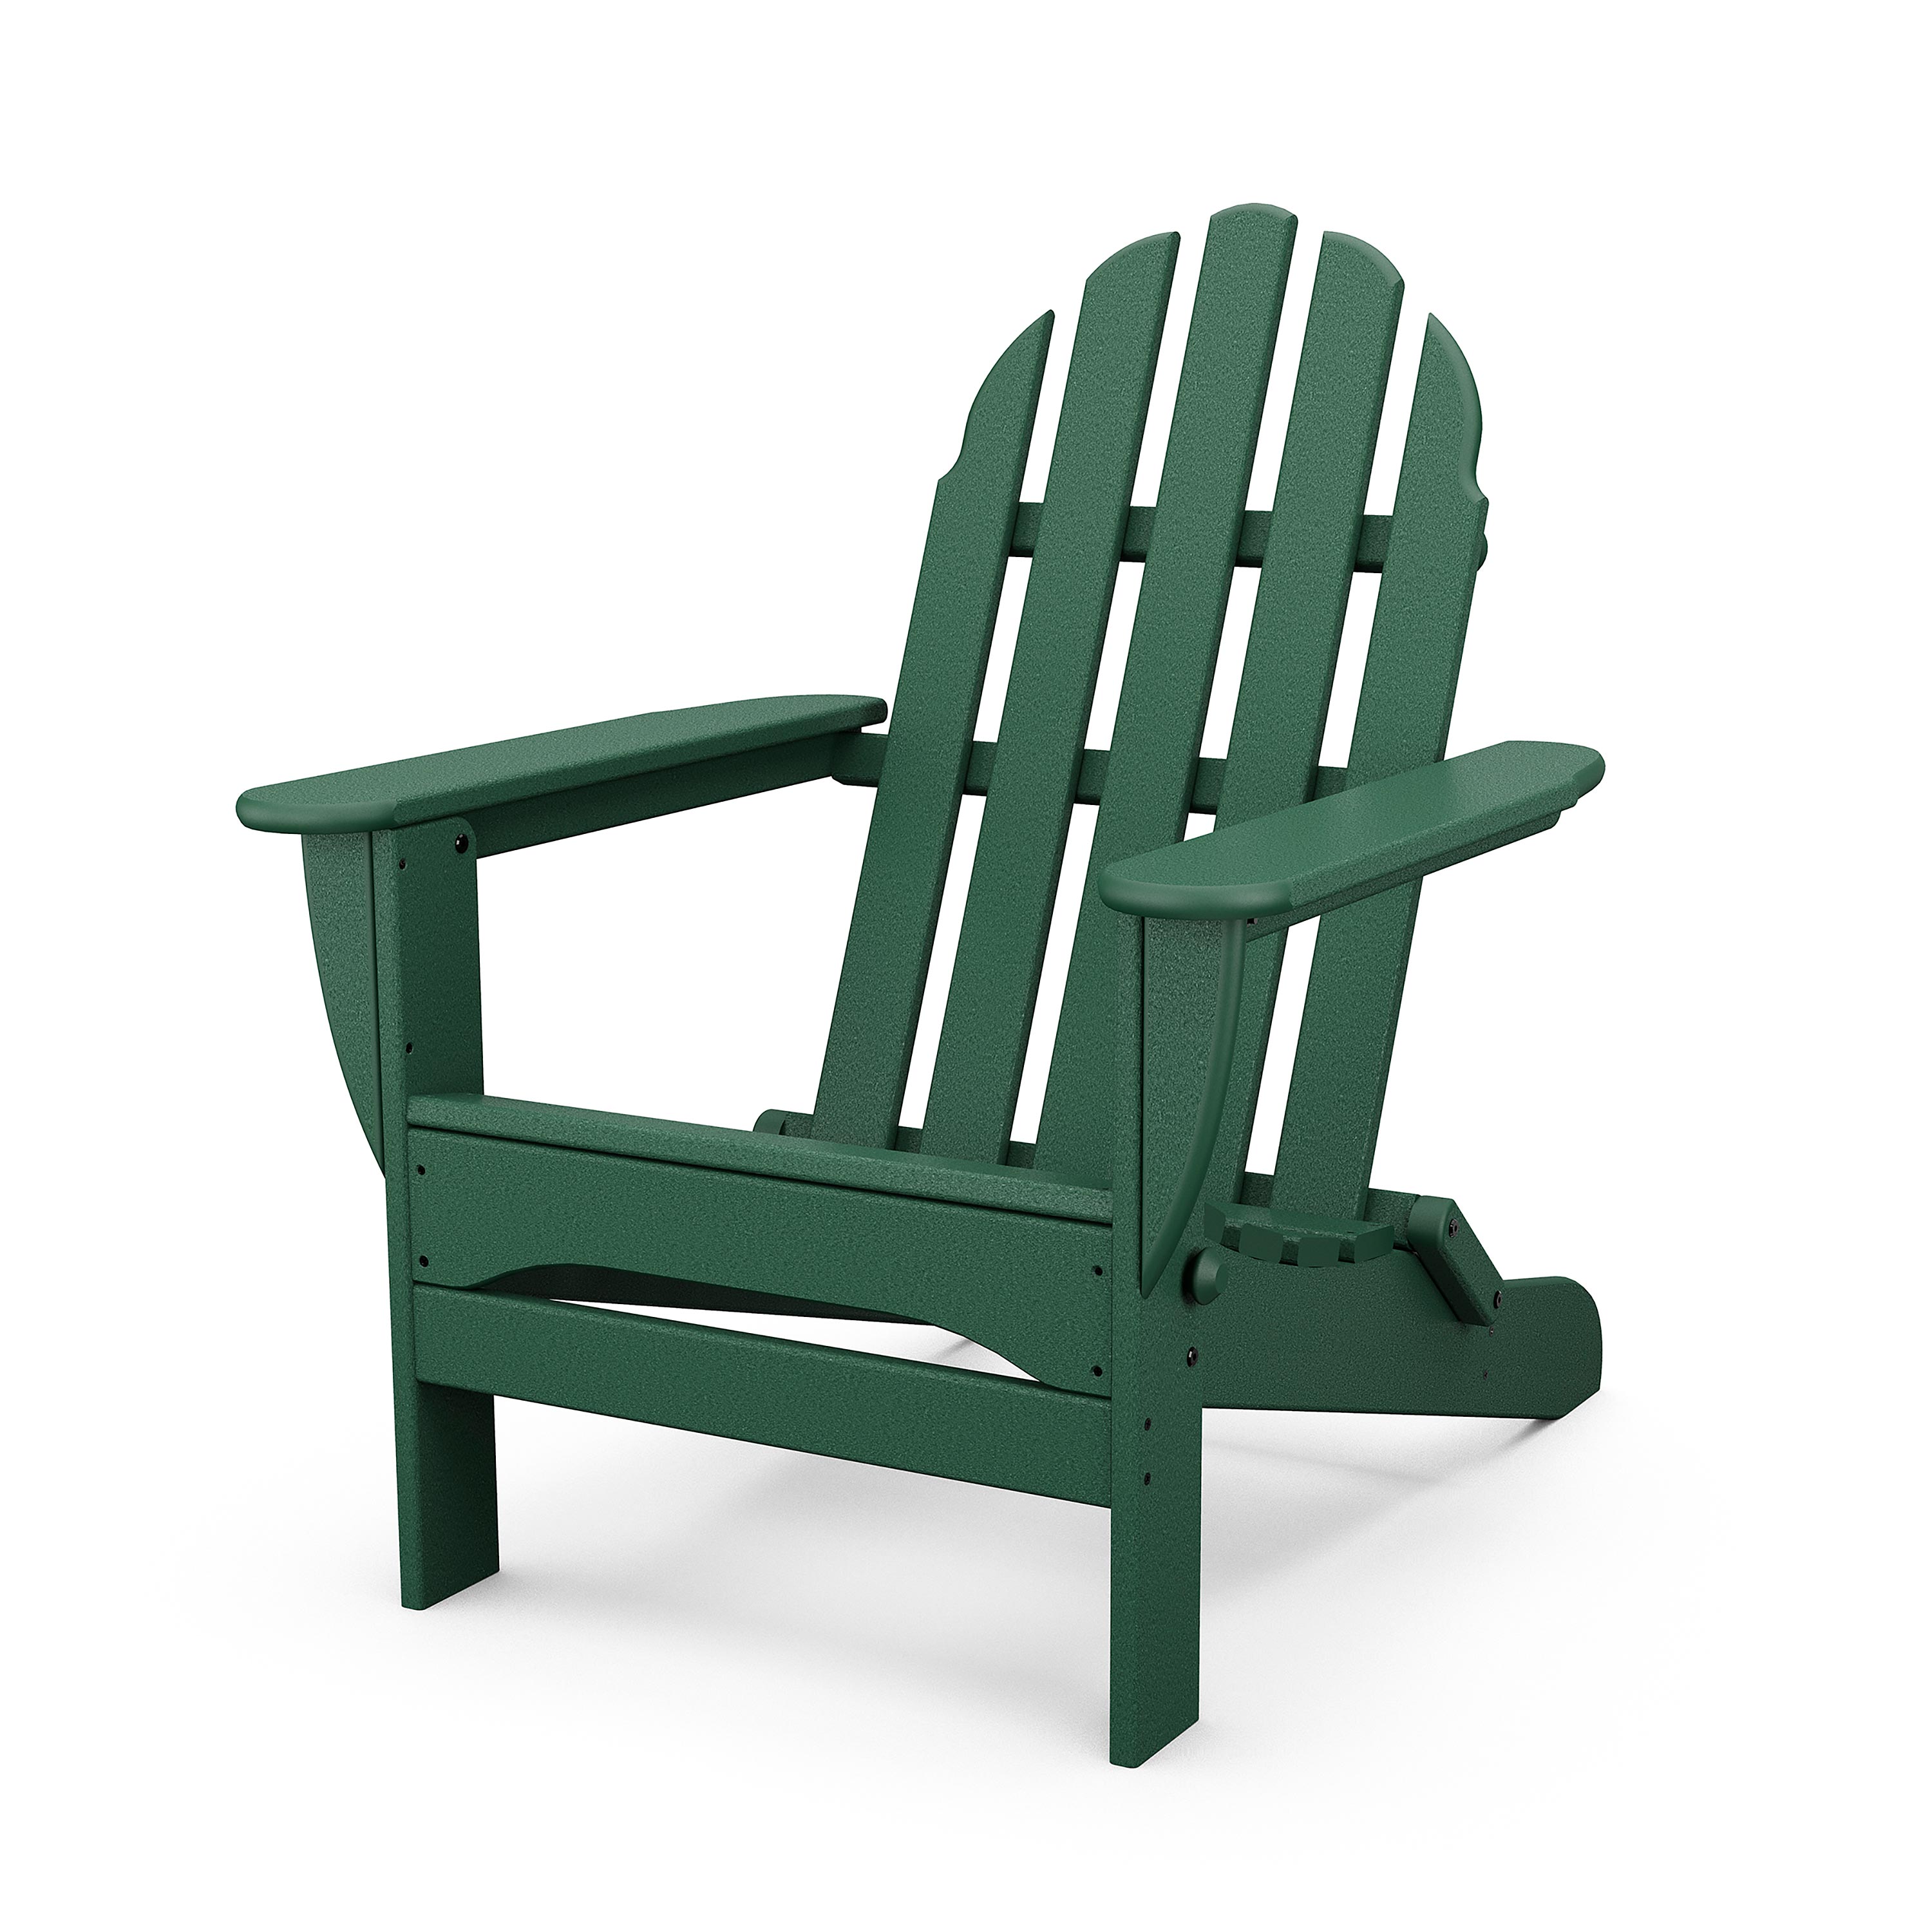 POLYWOOD™ Low-Maintenance Adirondack Chair